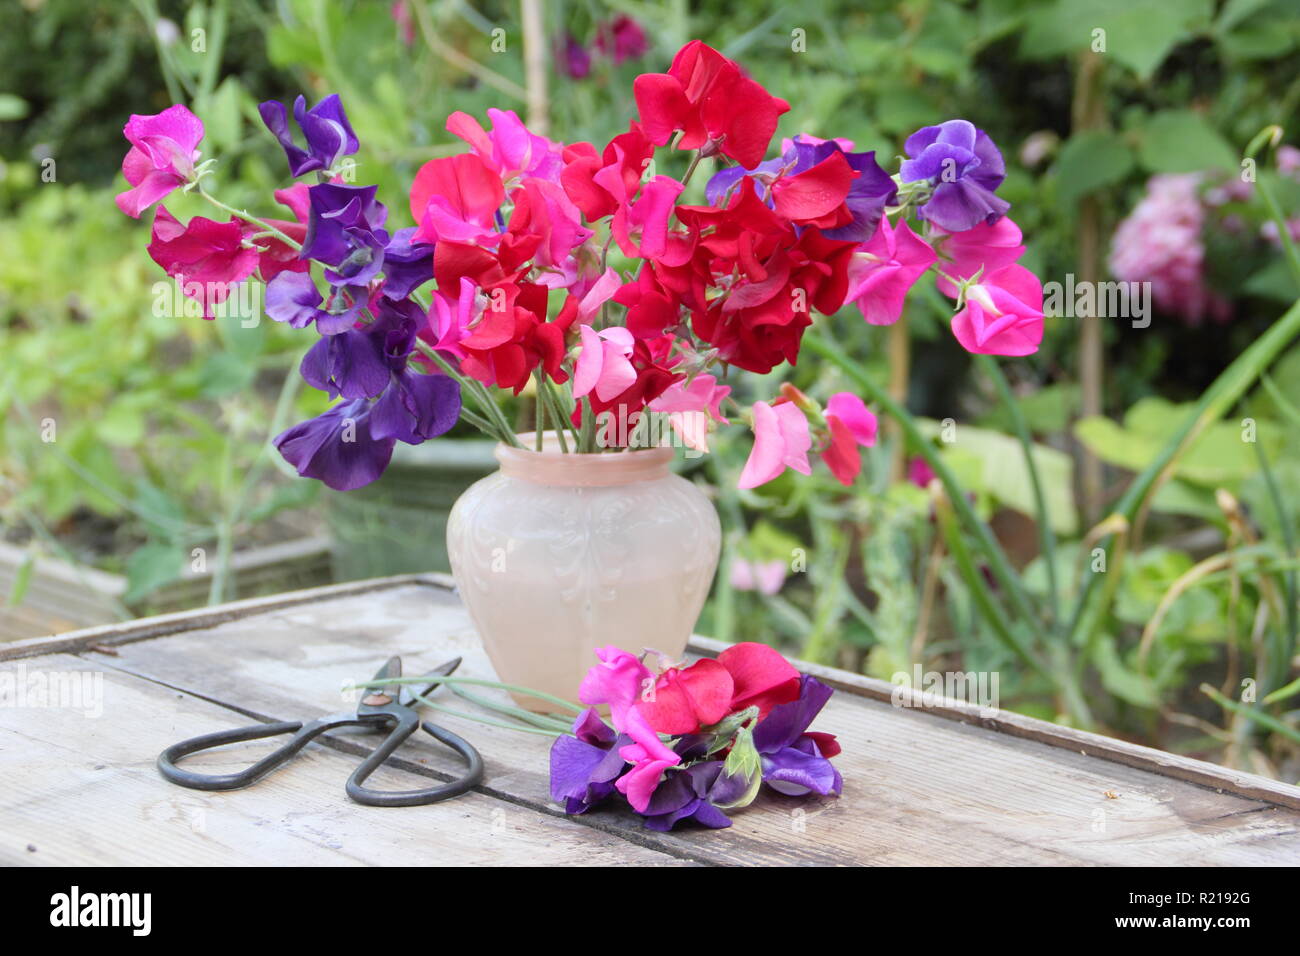 Lathyrus odoratus. Freshly picked bunch of  'Spencer' sweet pea flowers in vase on wooden table in UK garden. Stock Photo